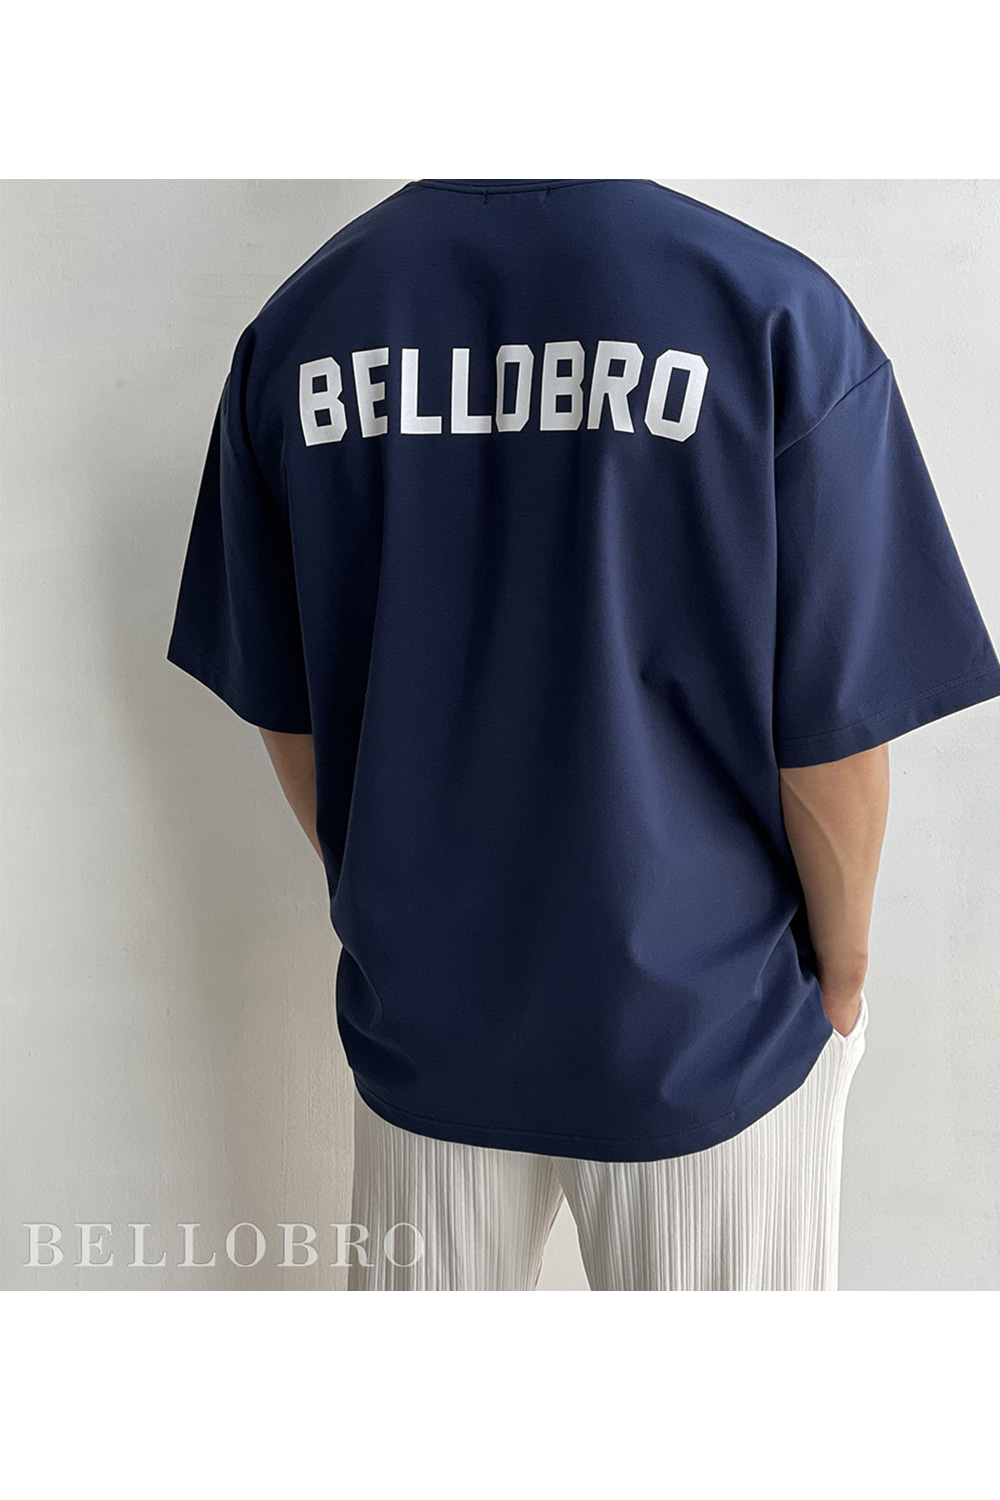 BELLOBRO T-Shirts (07)